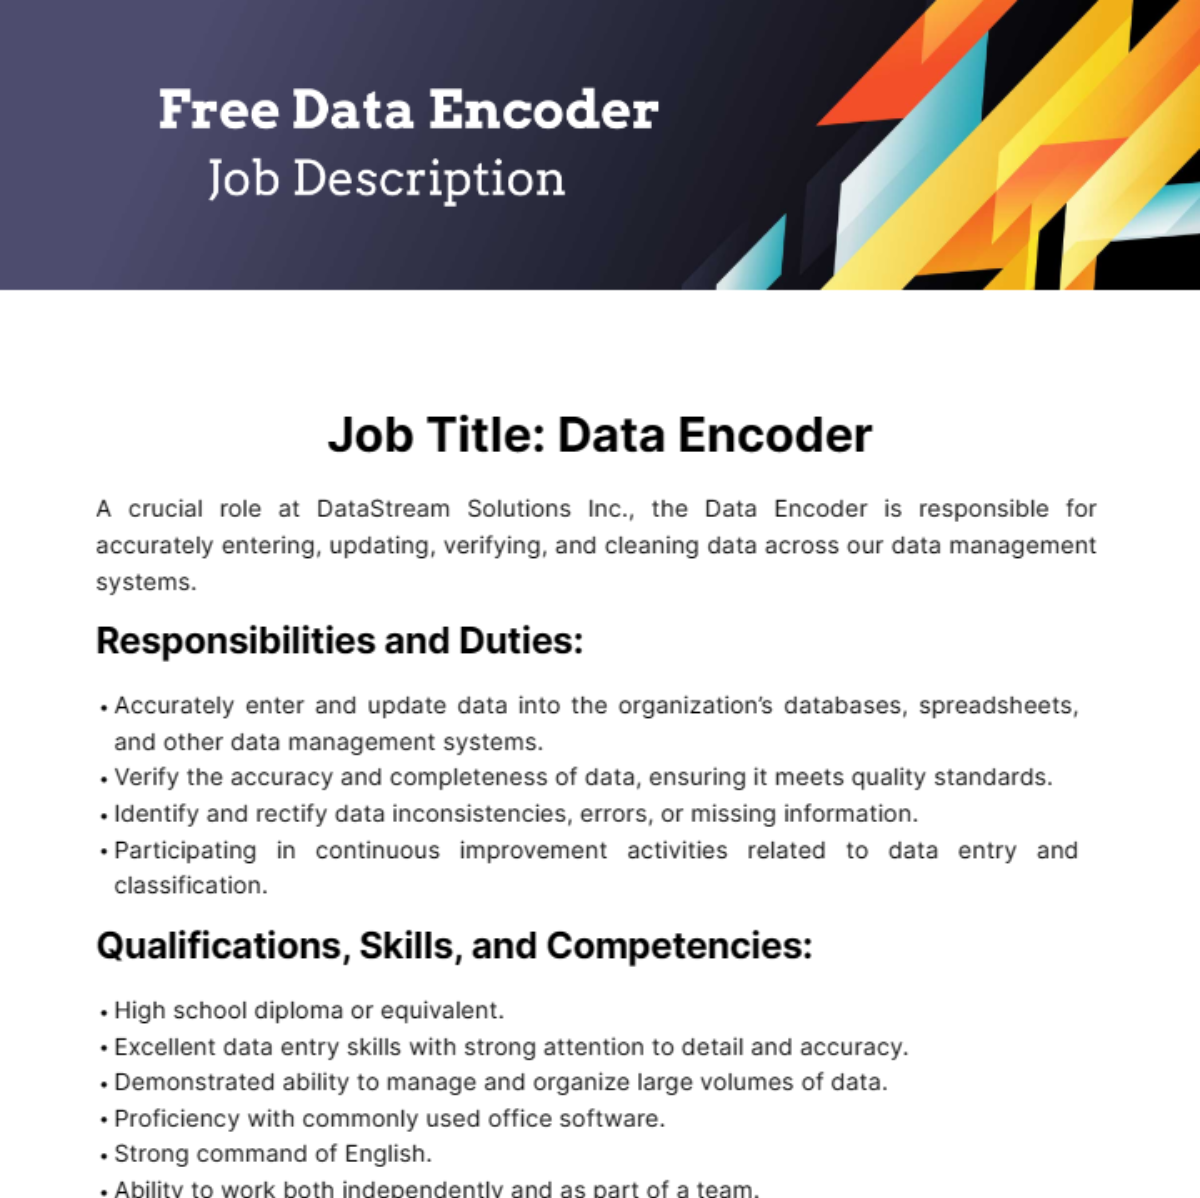 Free Data Encoder Job Description Template